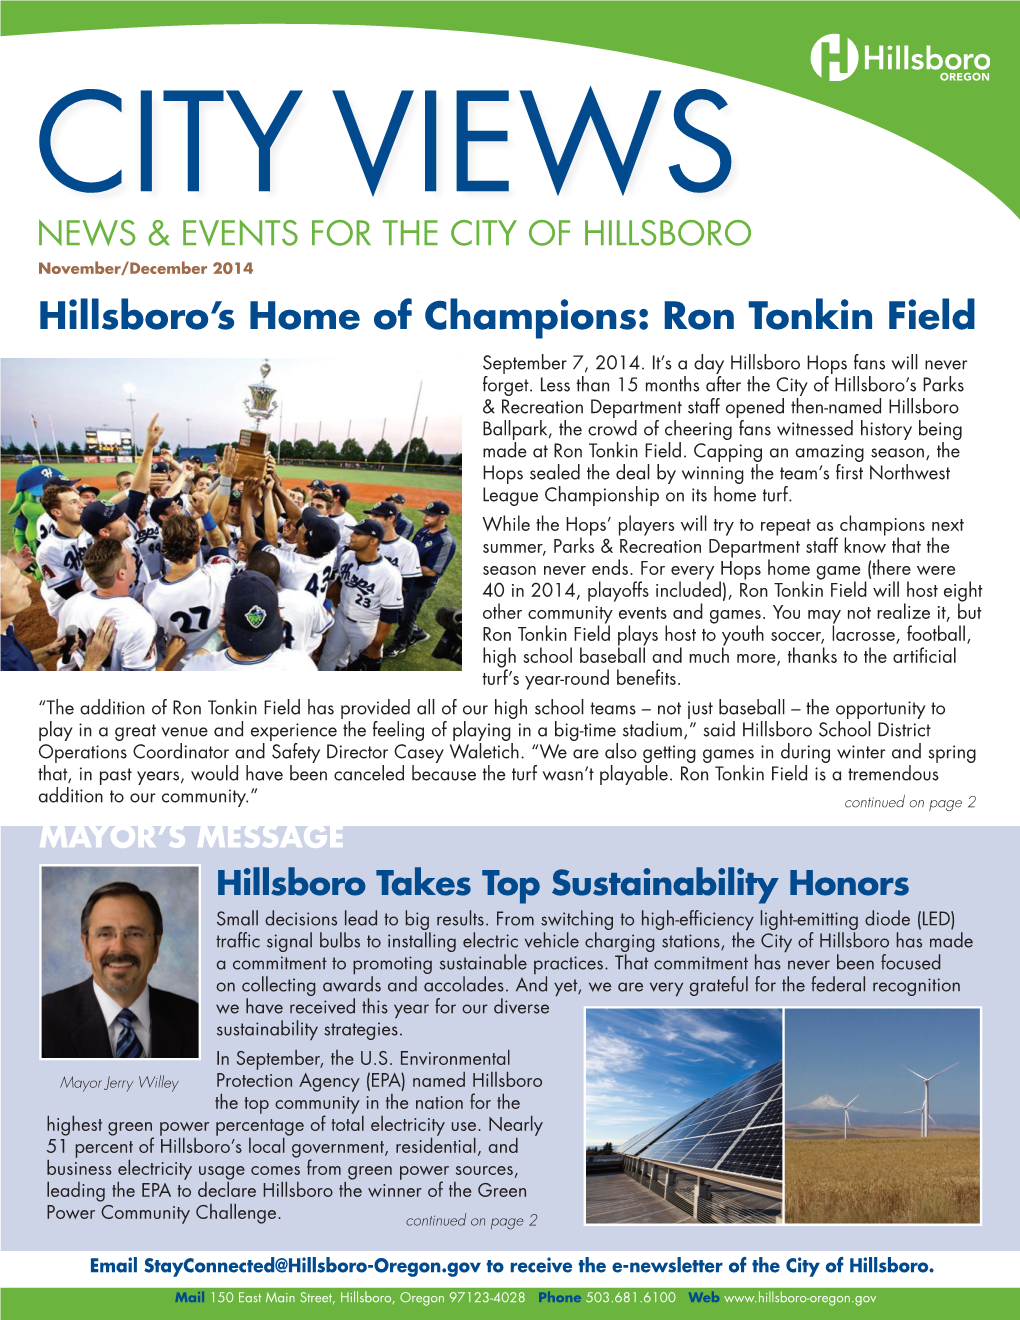 Hillsboro's Home of Champions: Ron Tonkin Field